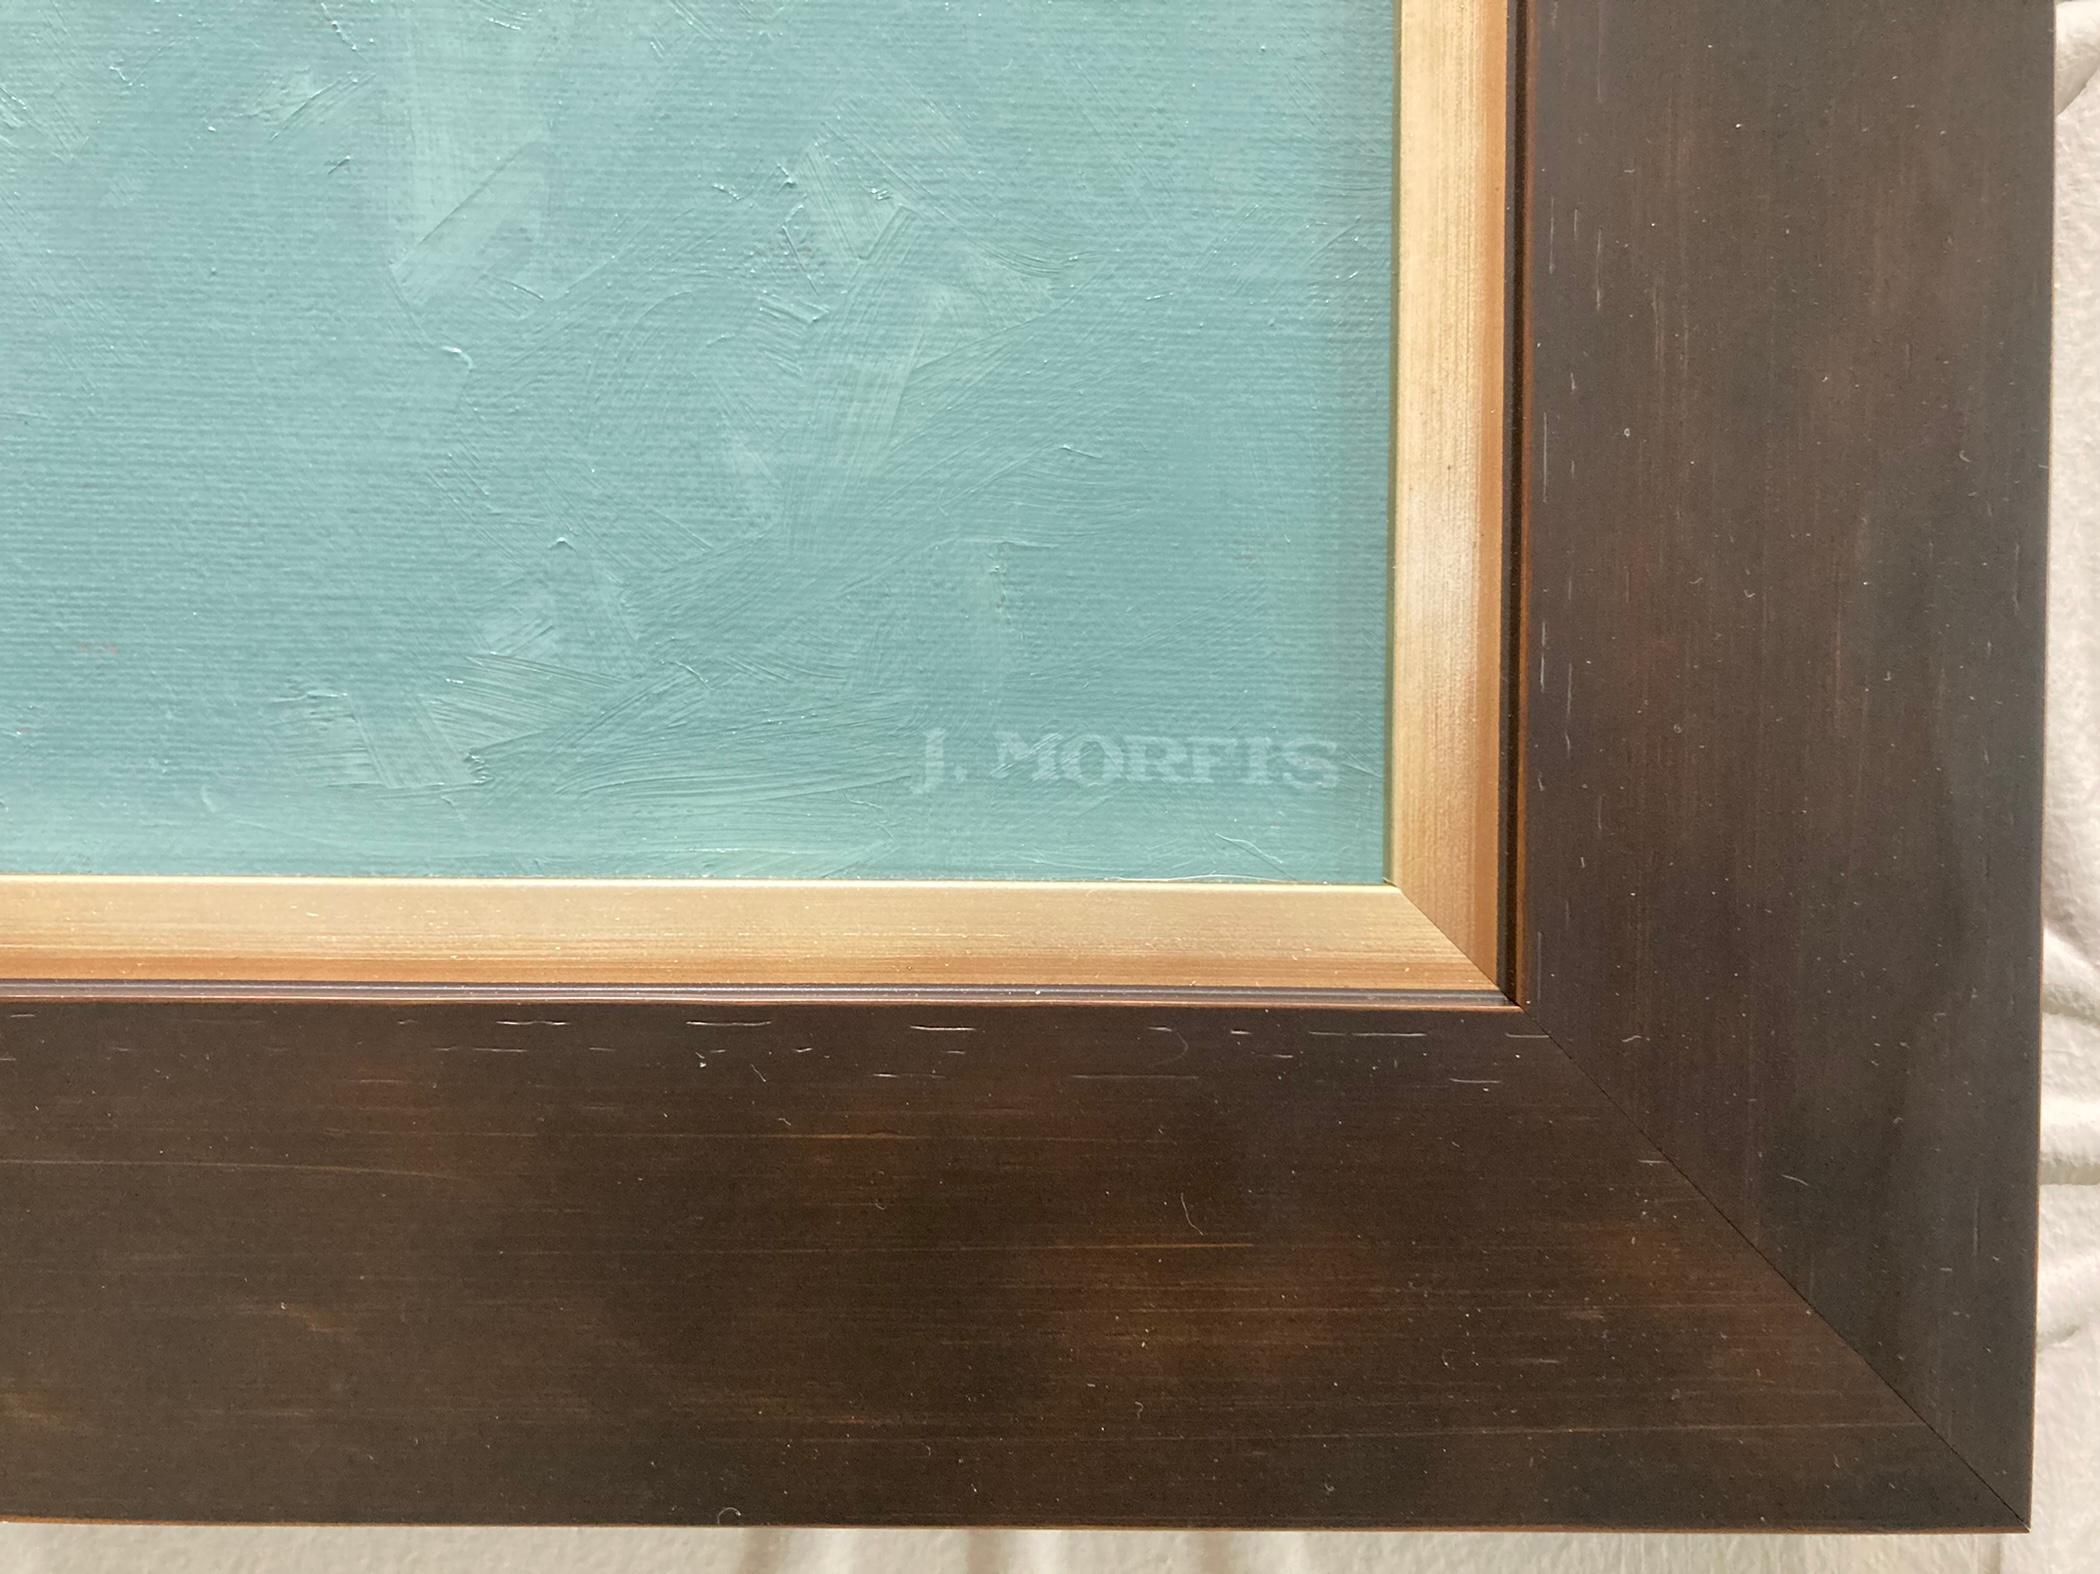 Horseshoe- Krabbe auf Hellblau (Grau), Still-Life Painting, von John Morfis